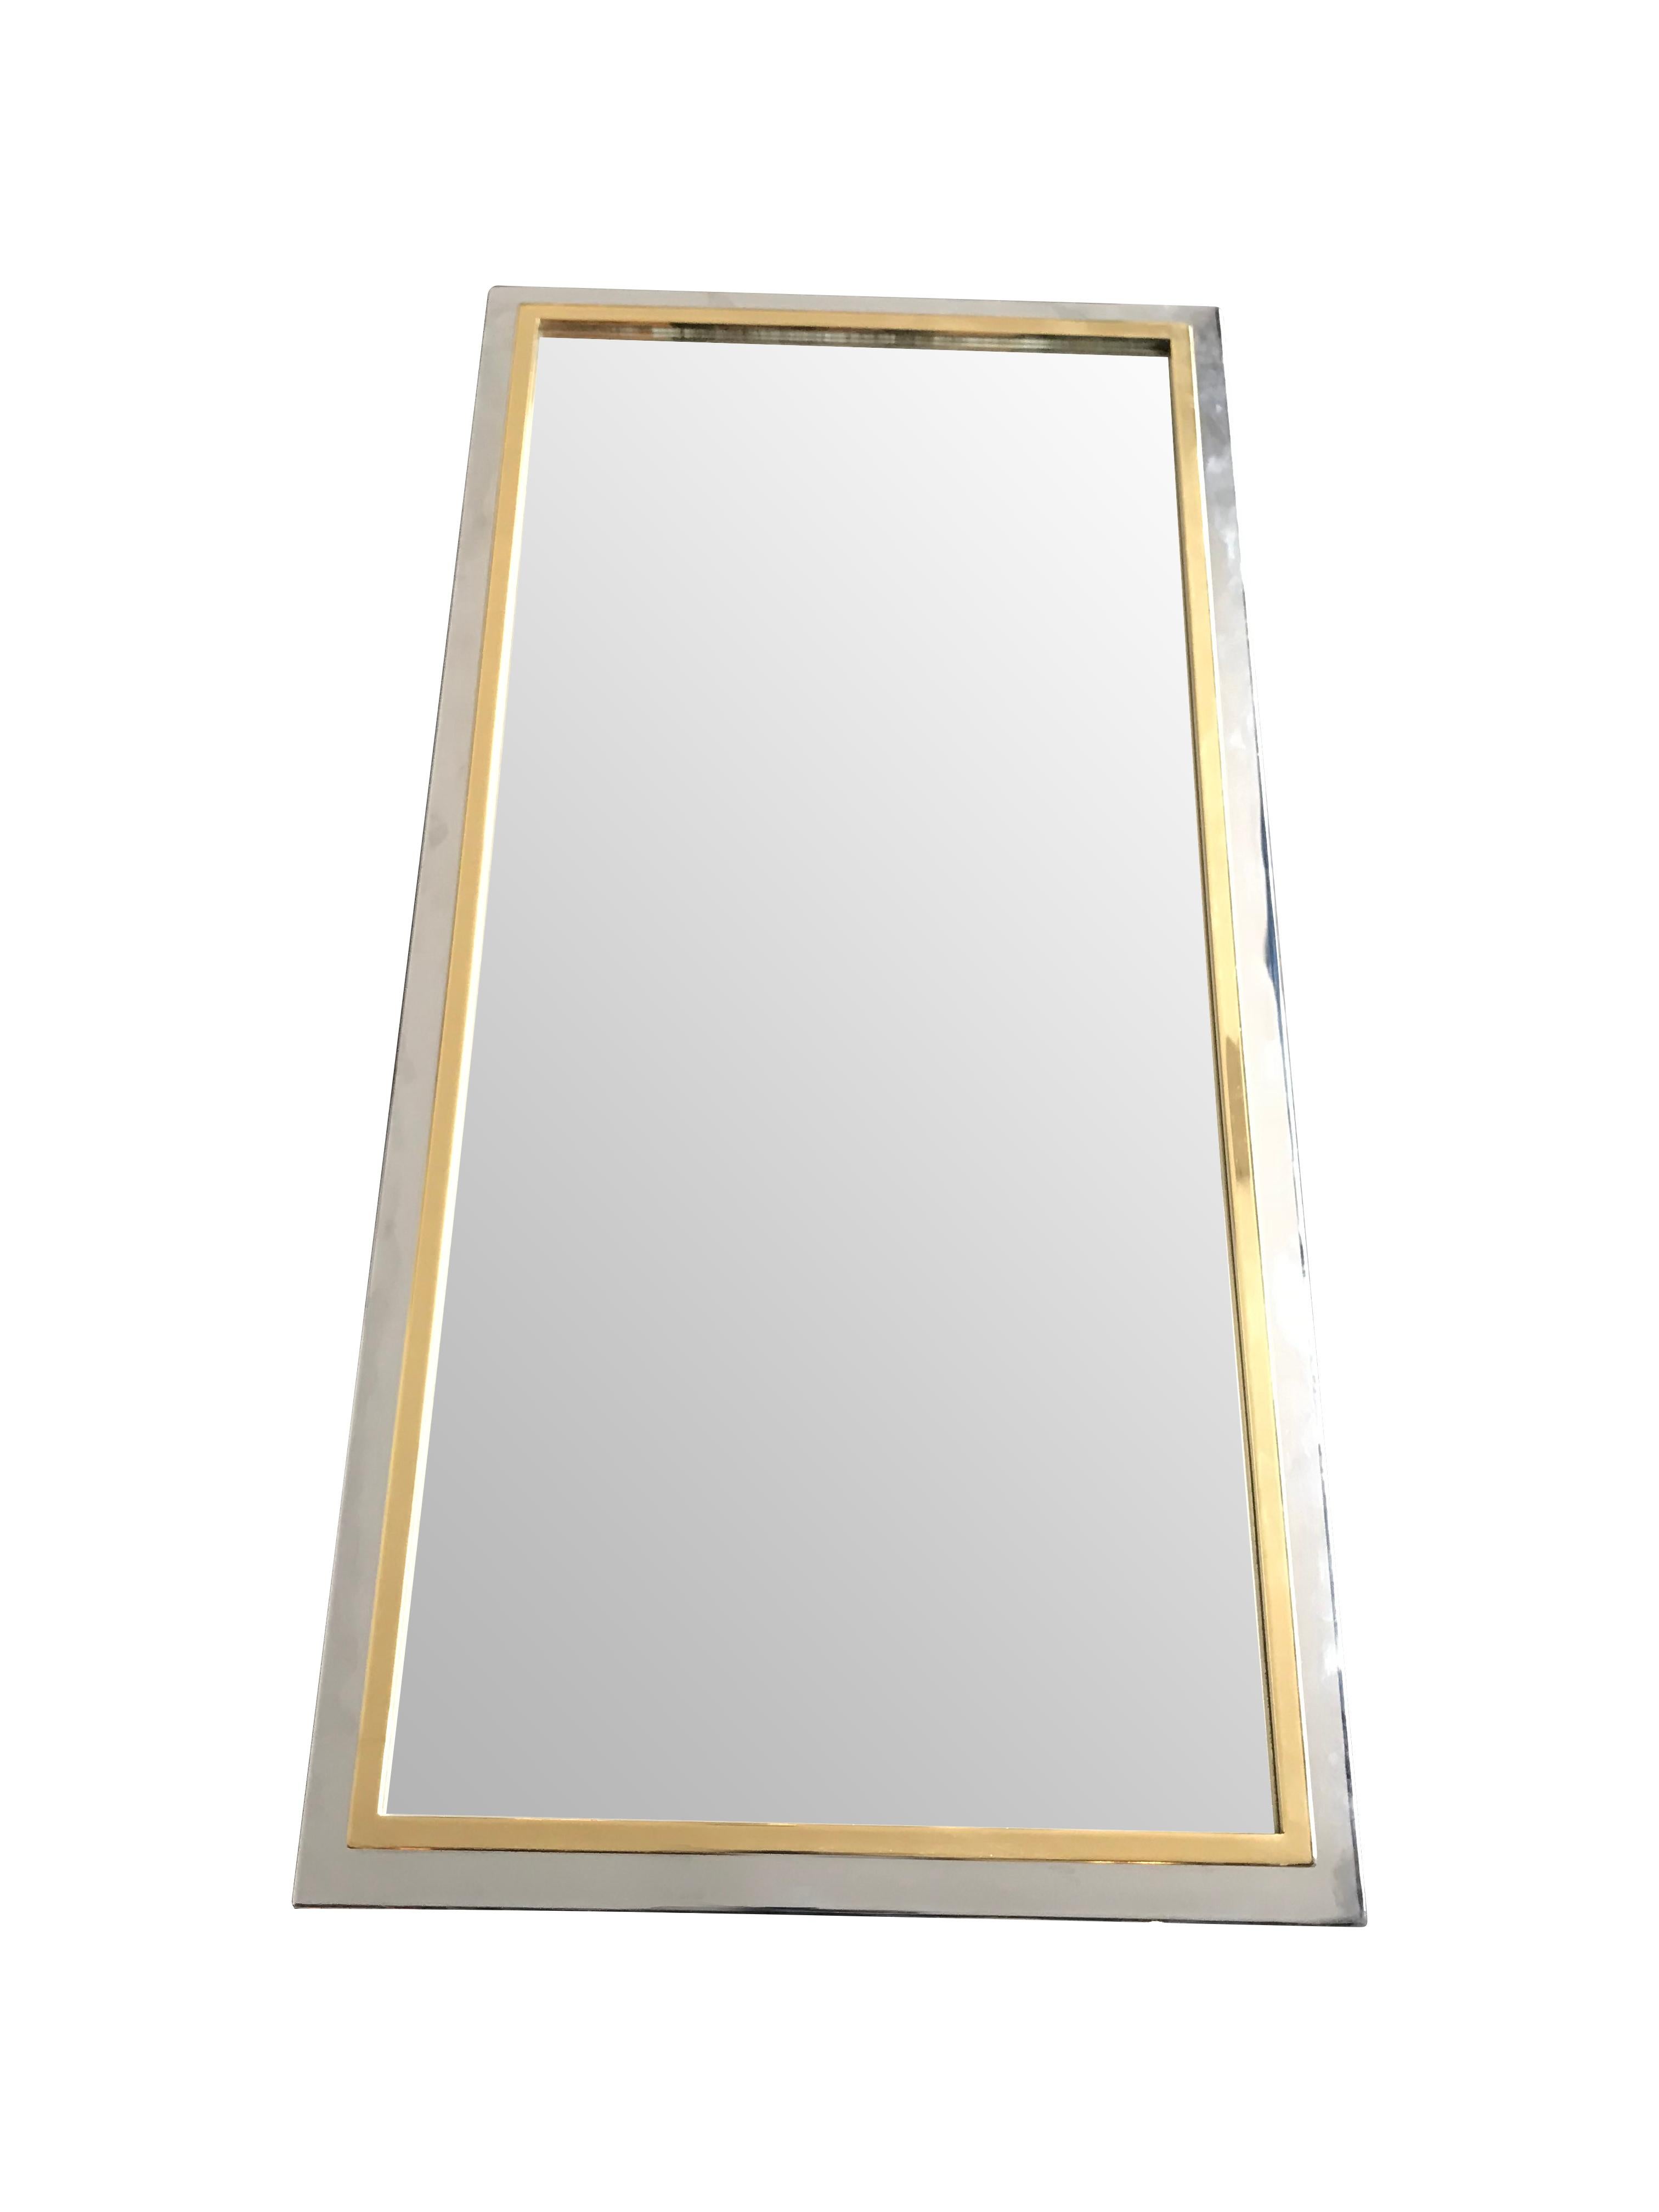 A Belgo chrome mirror with brass and chrome frame.